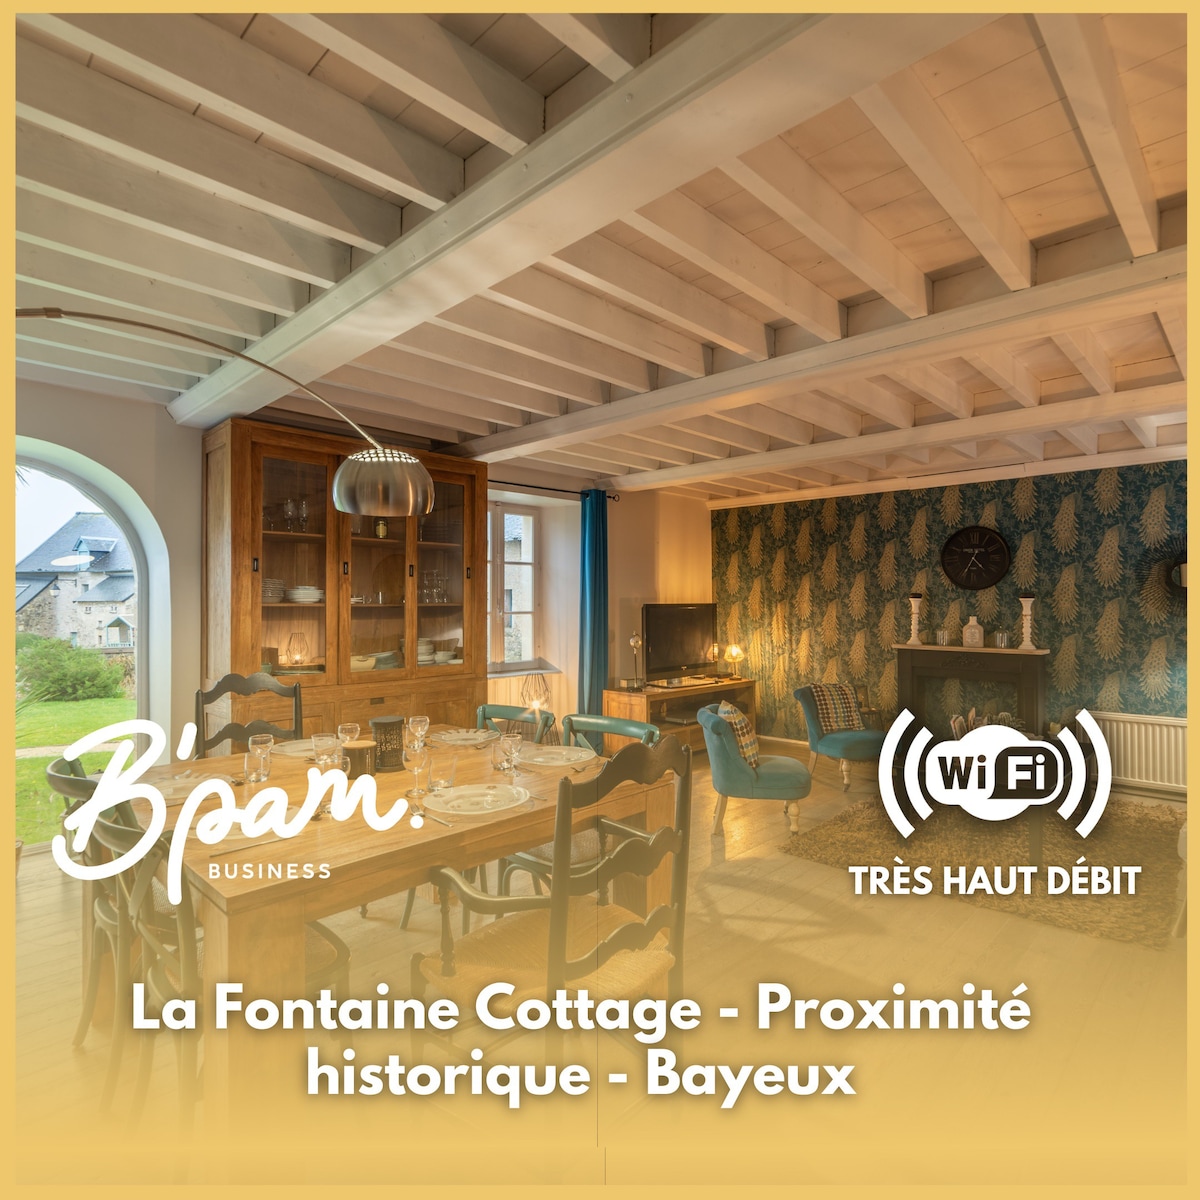 La Fontaine乡村小屋-历史悠久-Bayeux